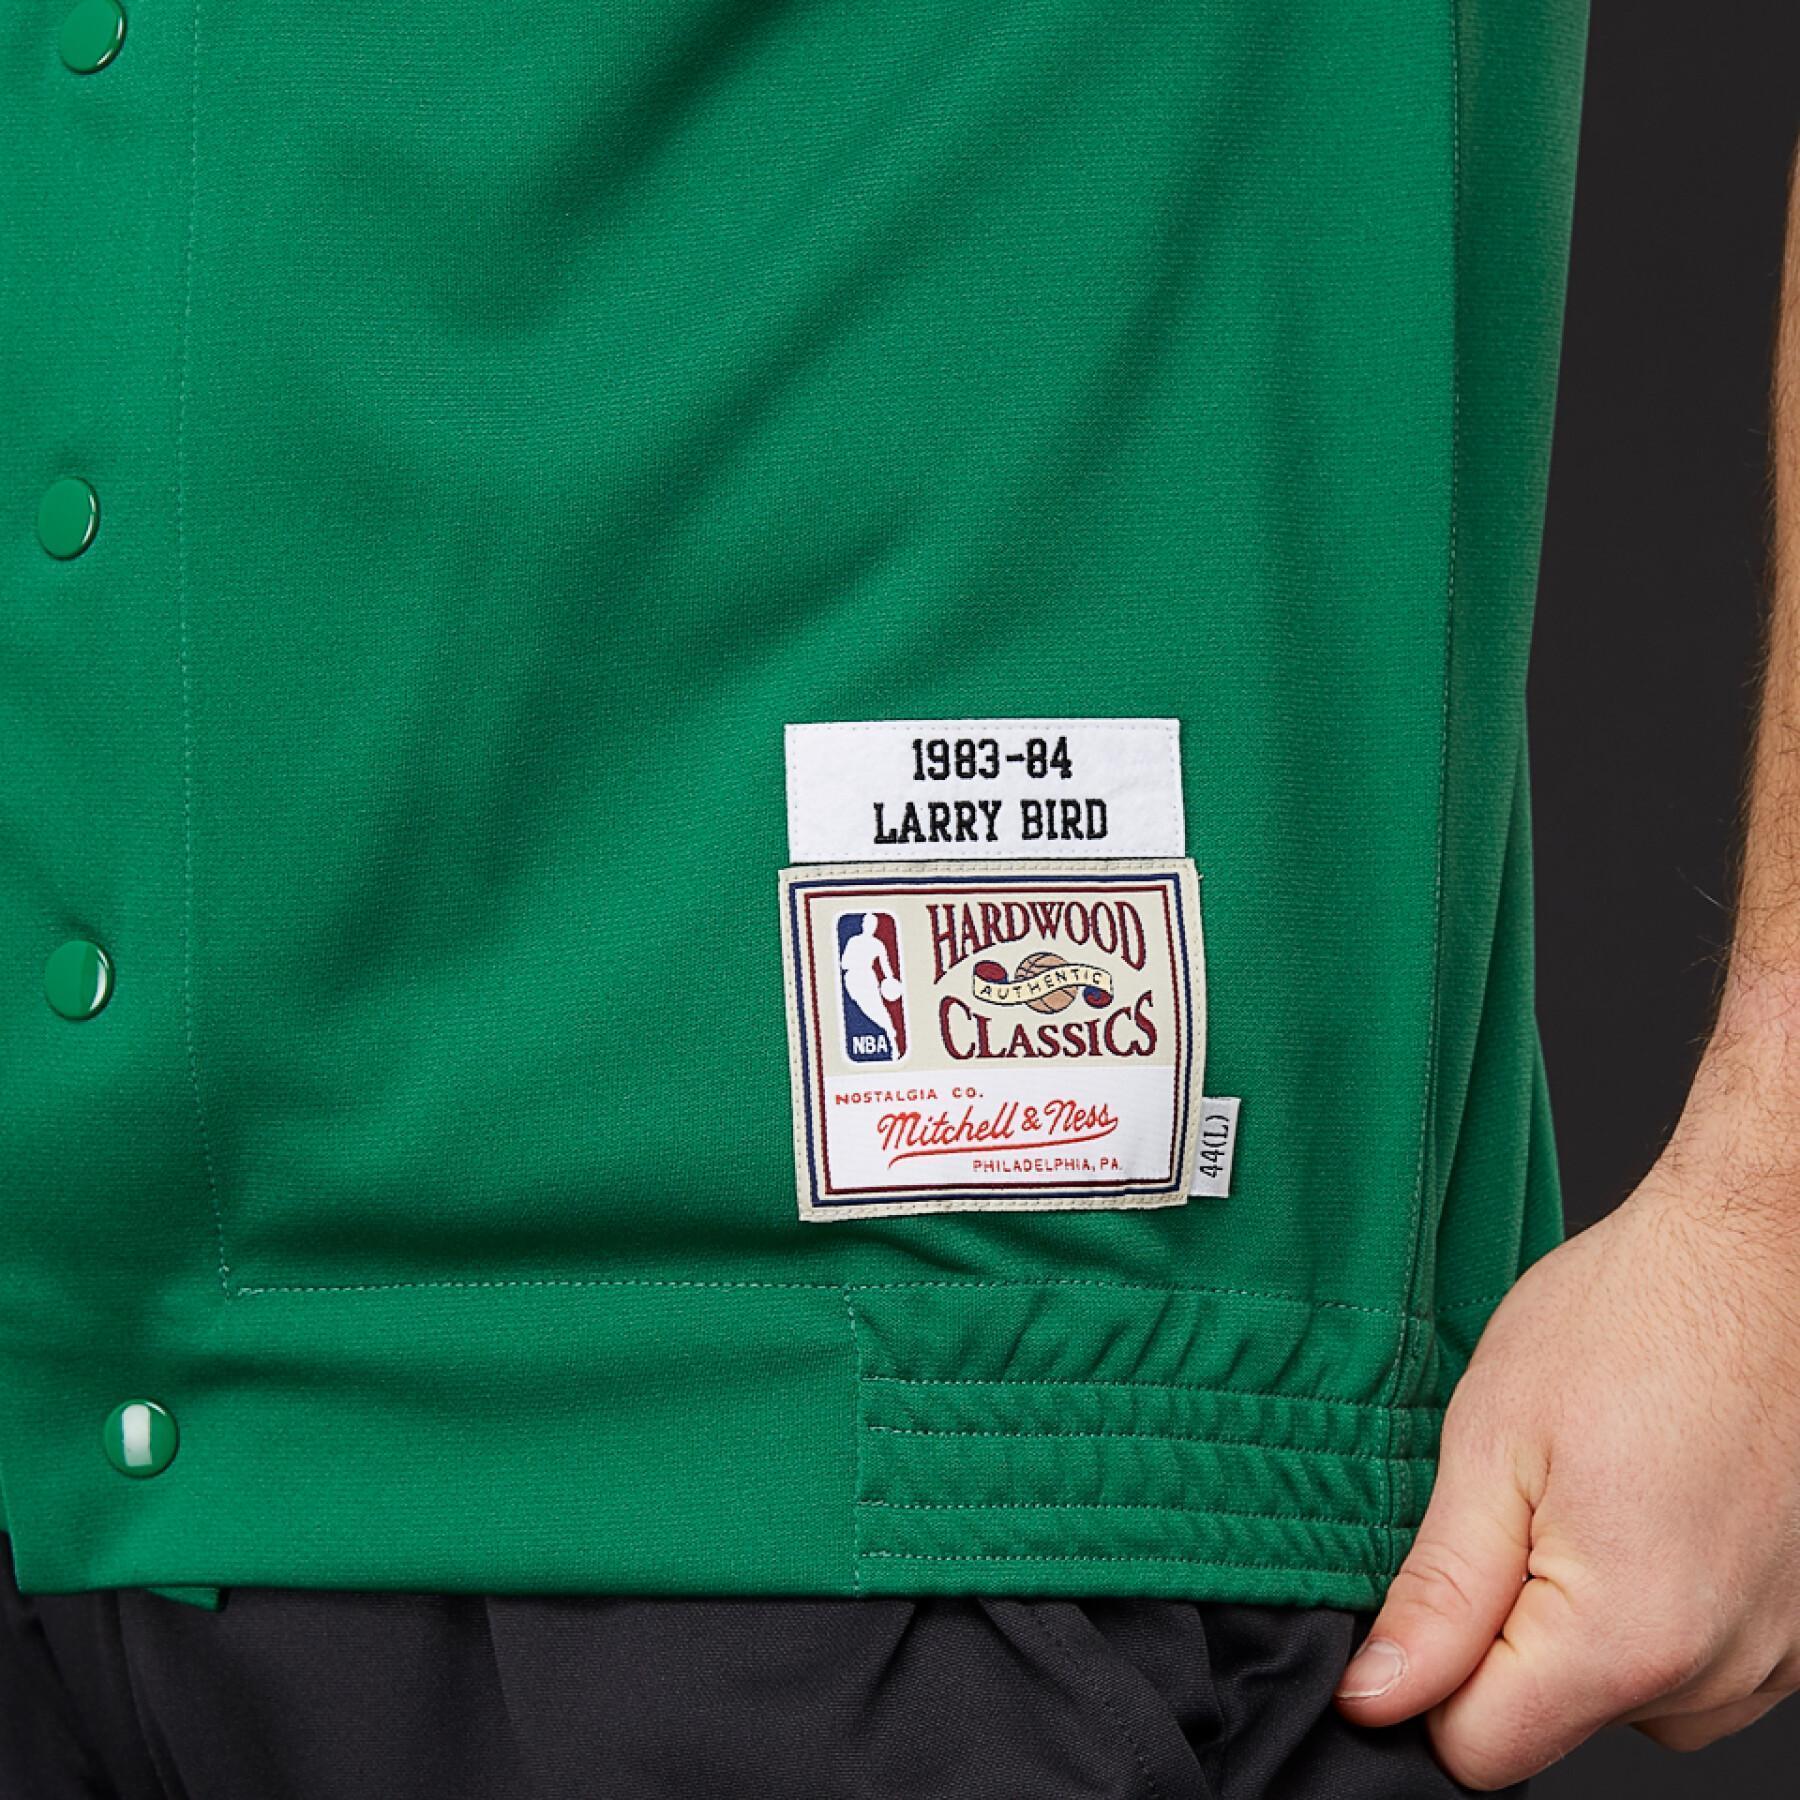 Camisa Boston Celtics nba authentic shooting